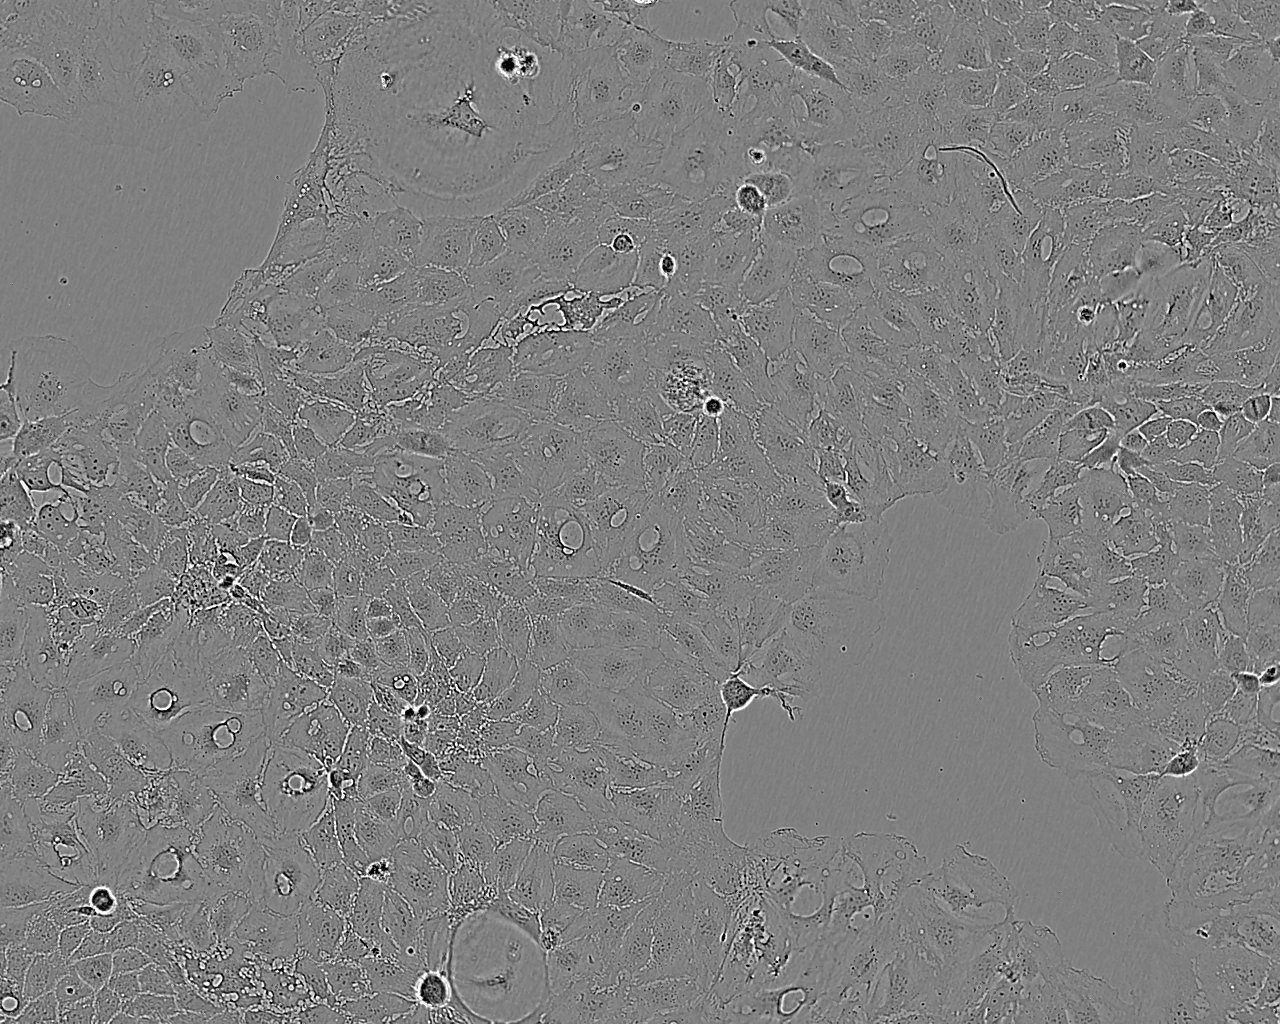 TK-10 epithelioid cells人肾癌细胞系,TK-10 epithelioid cells